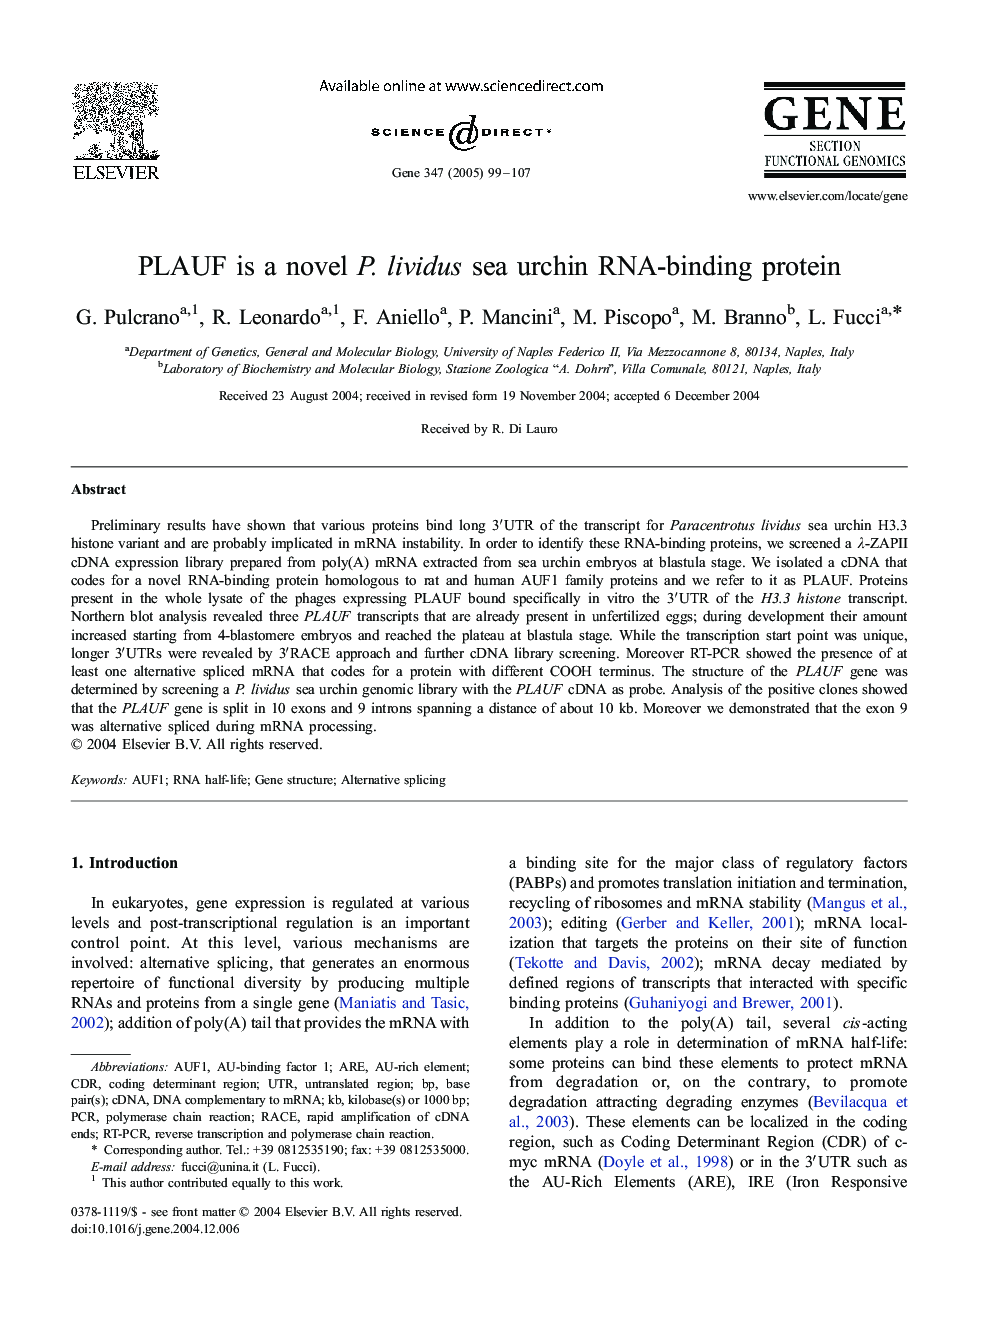 PLAUF is a novel P. lividus sea urchin RNA-binding protein